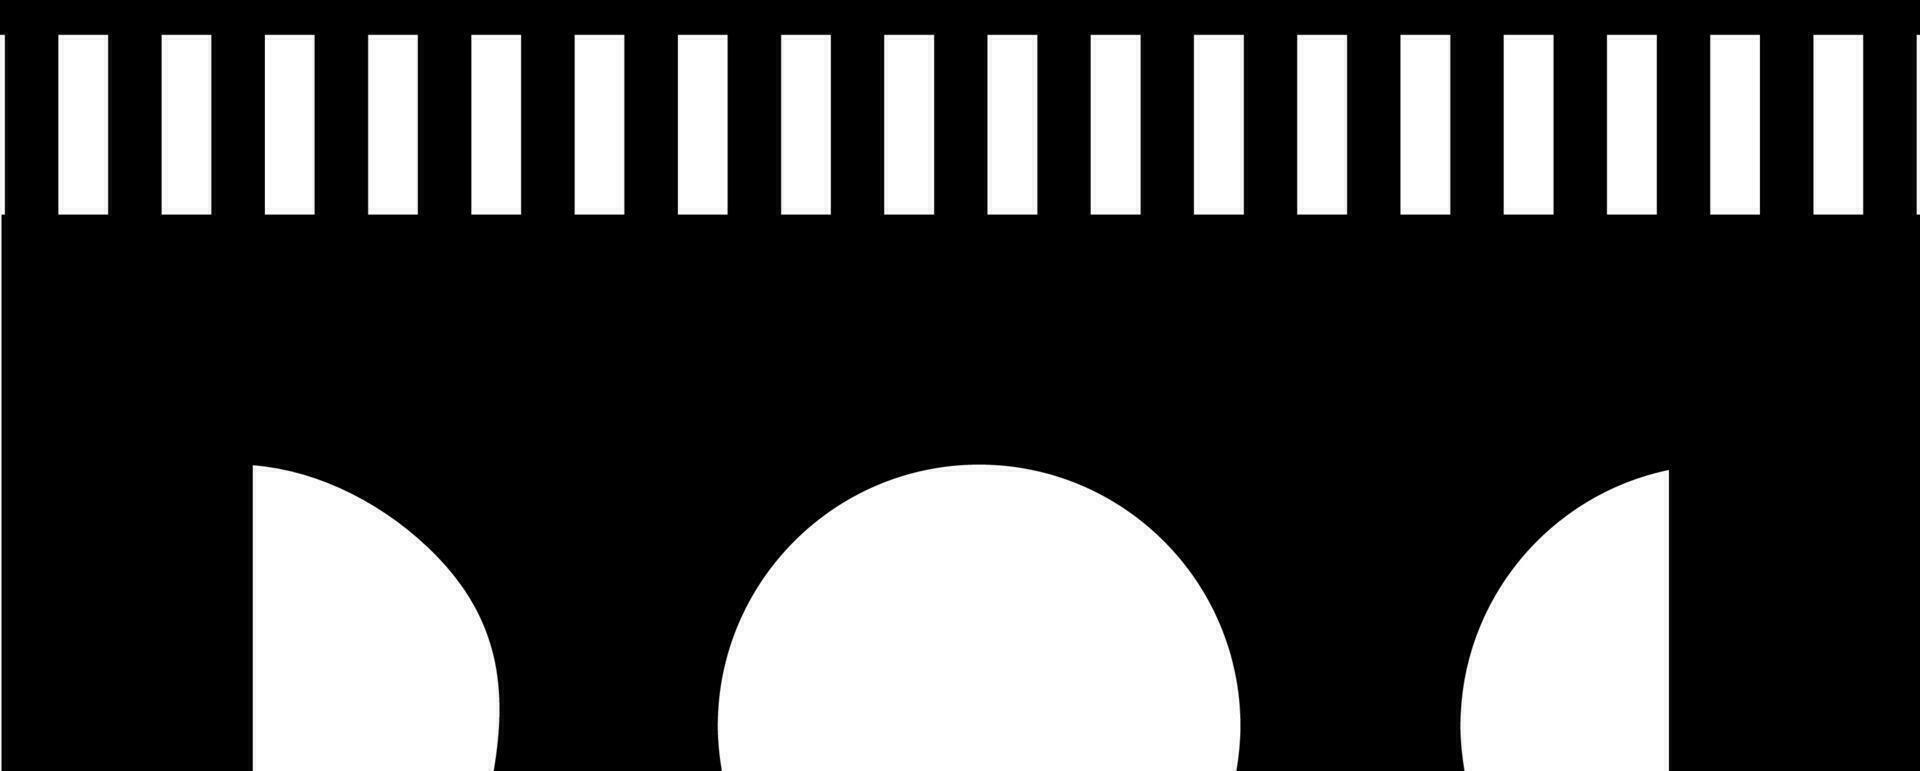 Tunnel bridge icon in black color. vector